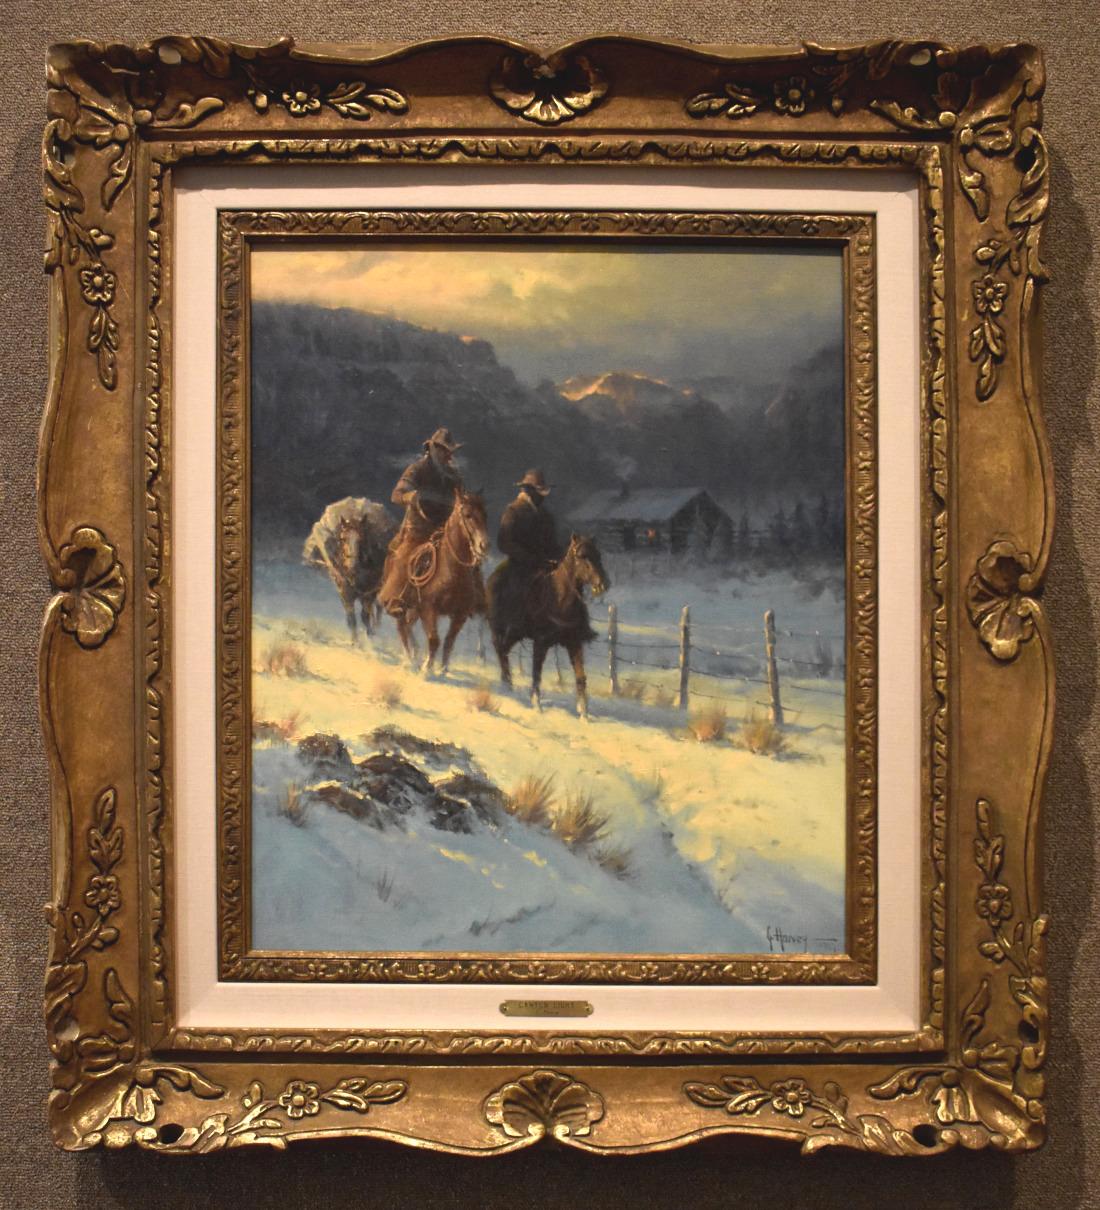 G. Harvey Landscape Painting - "CANYON LIGHT" TEXAS WESTERN LANDSCAPE COWBOYS HORSES SNOW 24 x 20 IMAGE SIZE